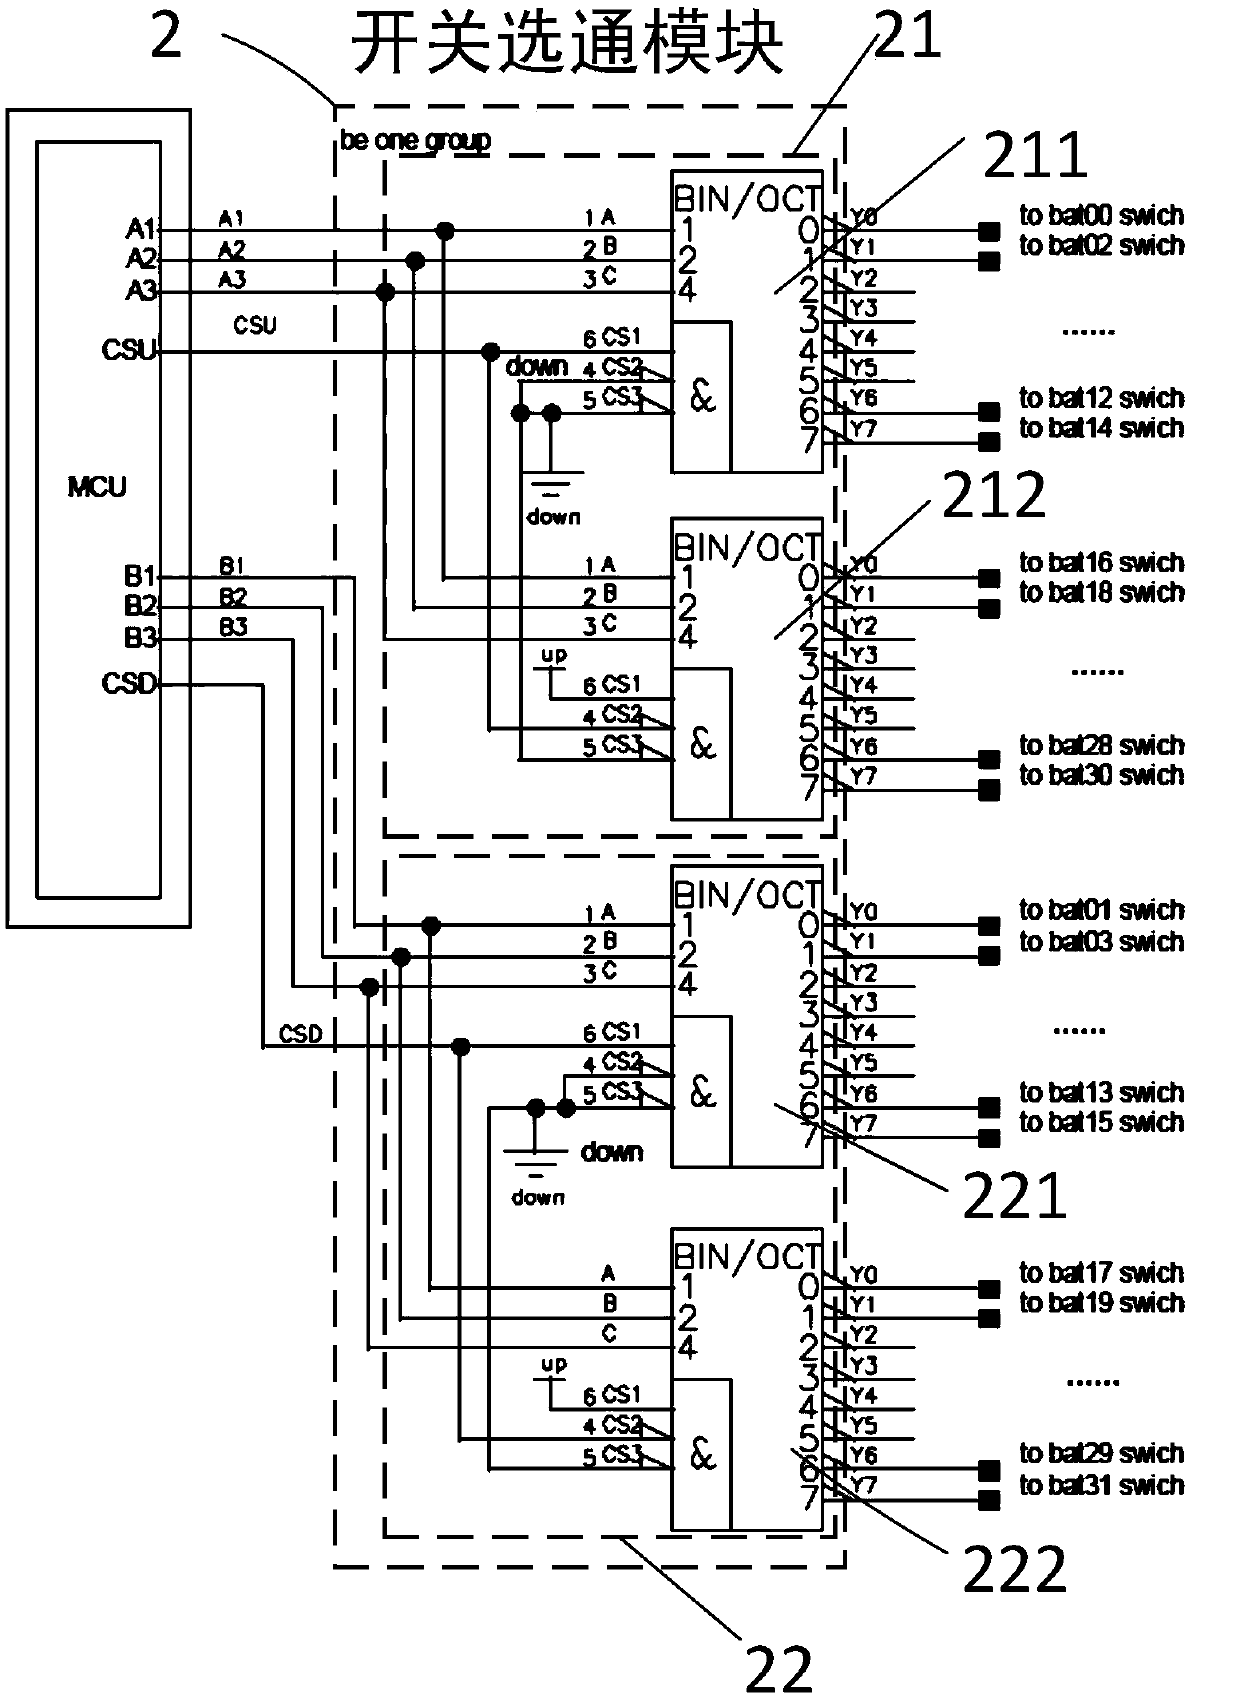 Battery management system and battery switching matrix interlocking circuit and interlocking method thereof